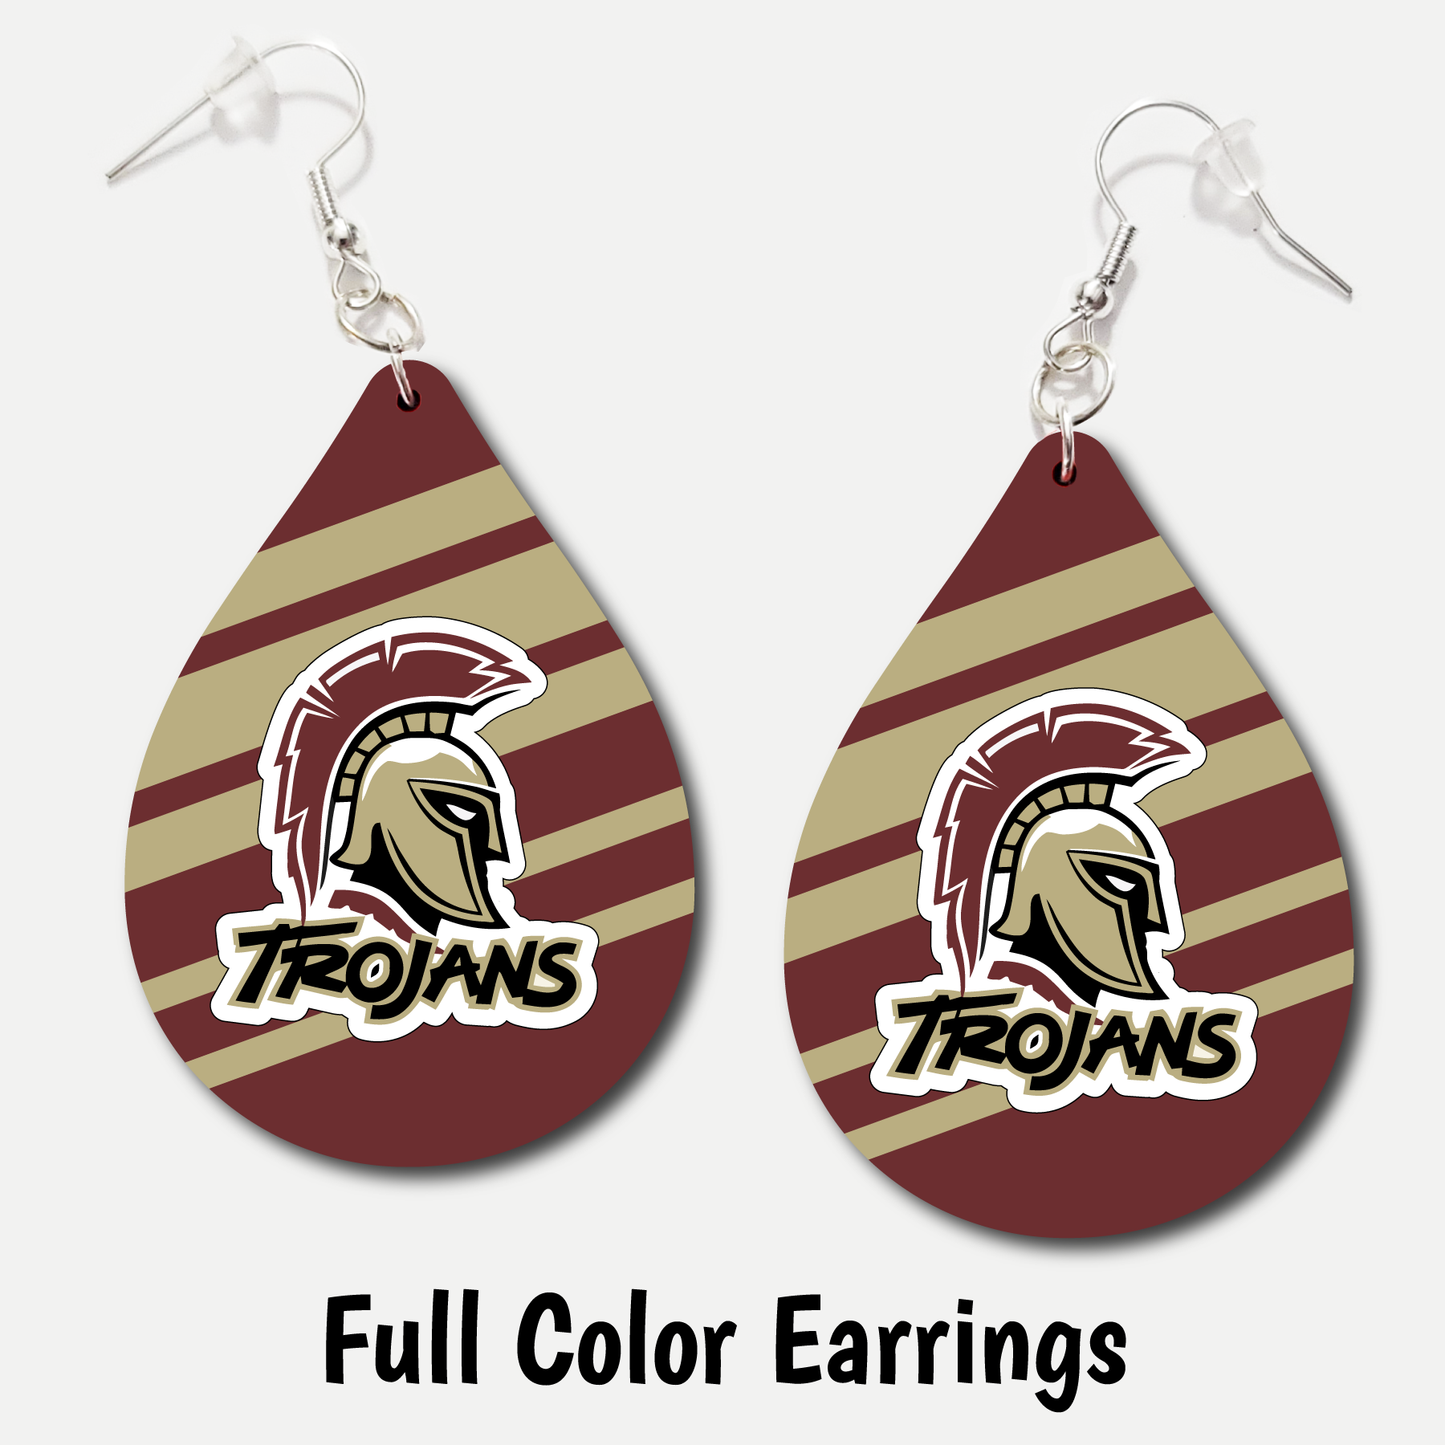 Rigby Trojans - Full Color Earrings